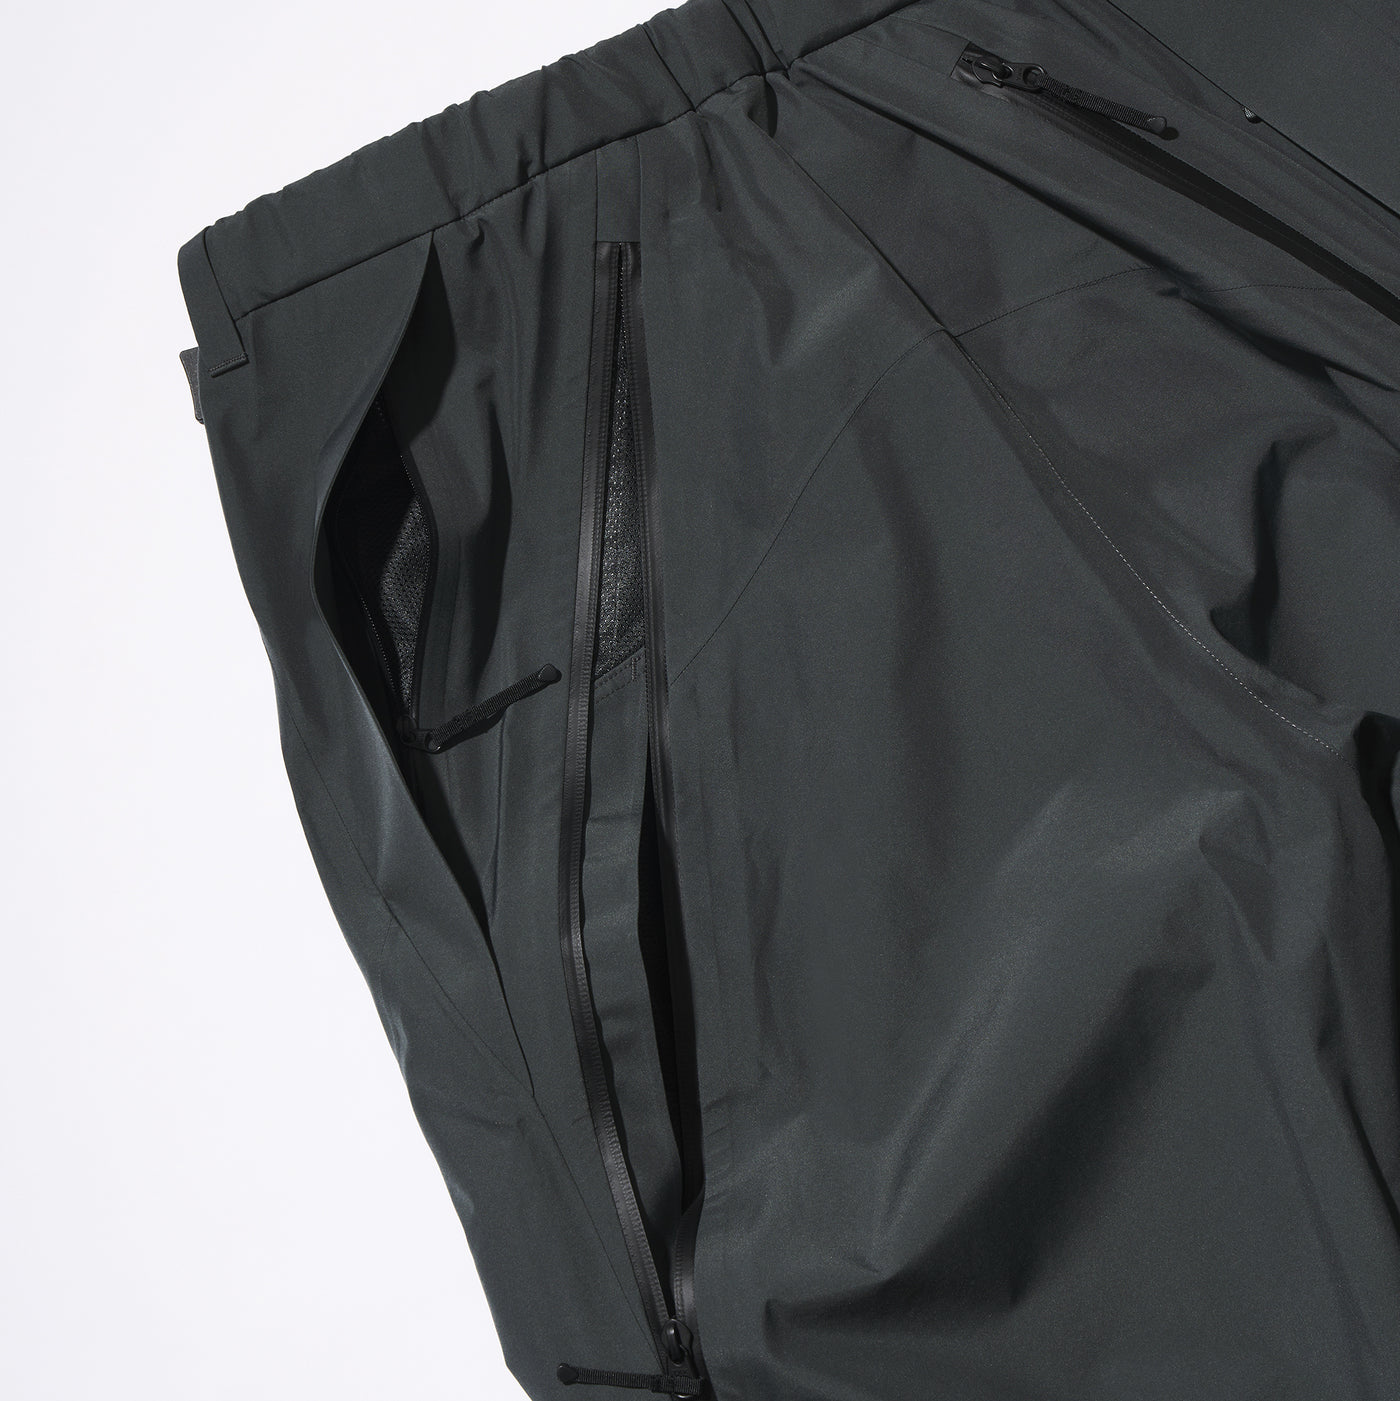 Men's GORE-TEX 3L Shell Trousers